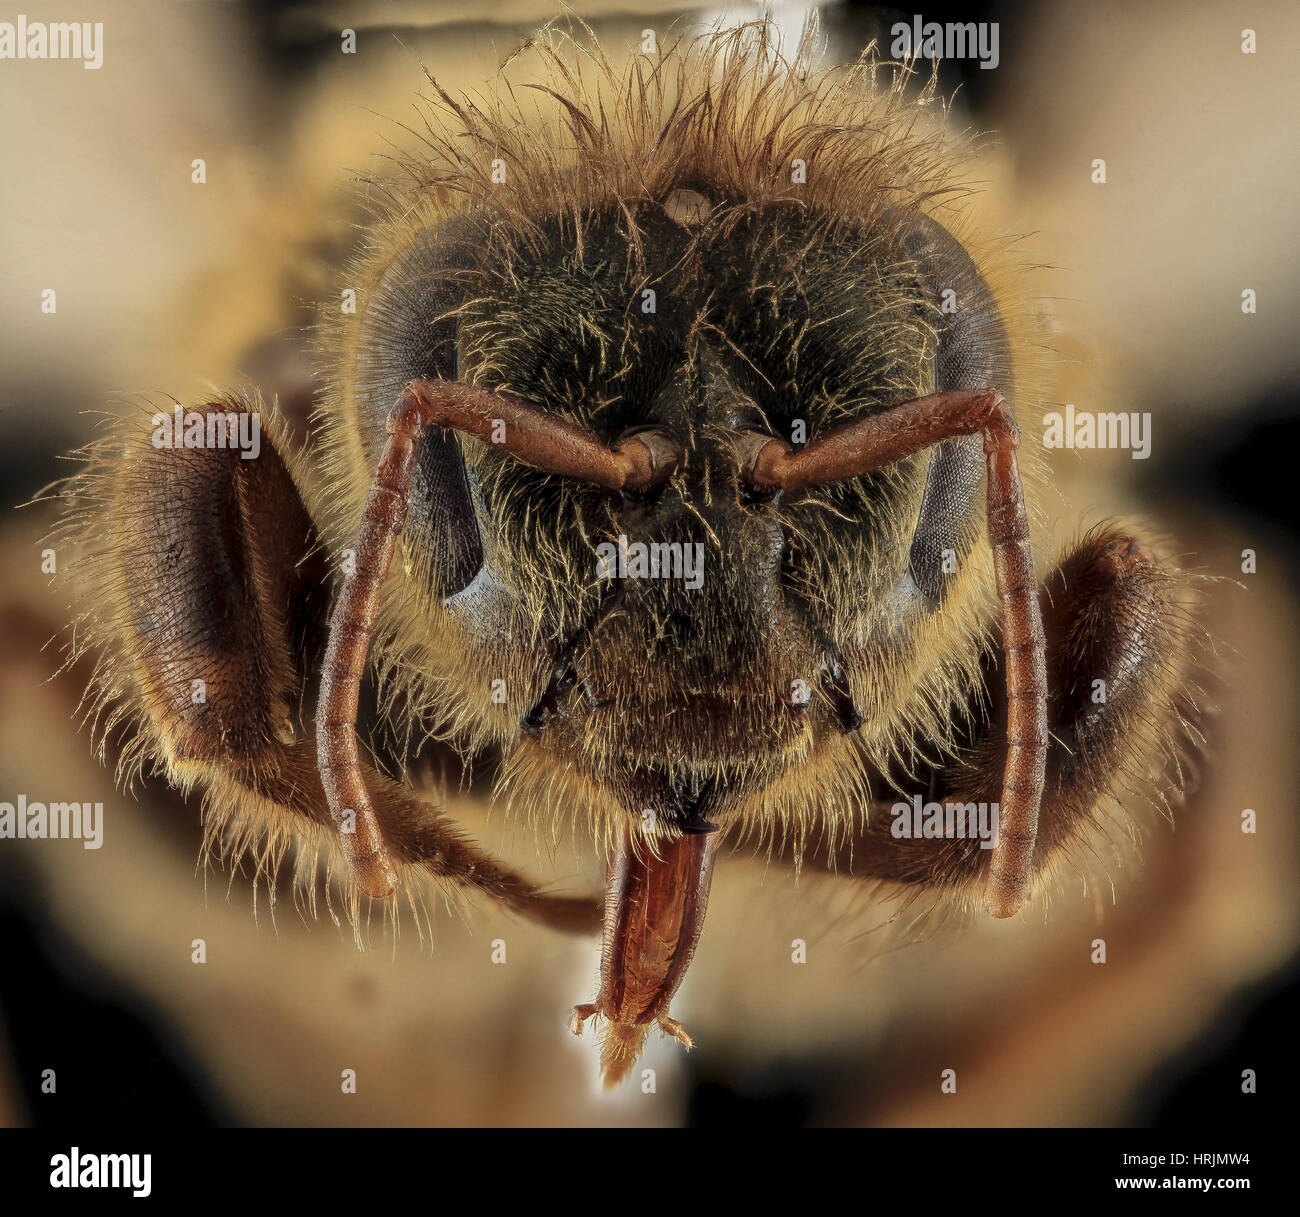 Honey Bee, Apis mellifera, Queen Stock Photo